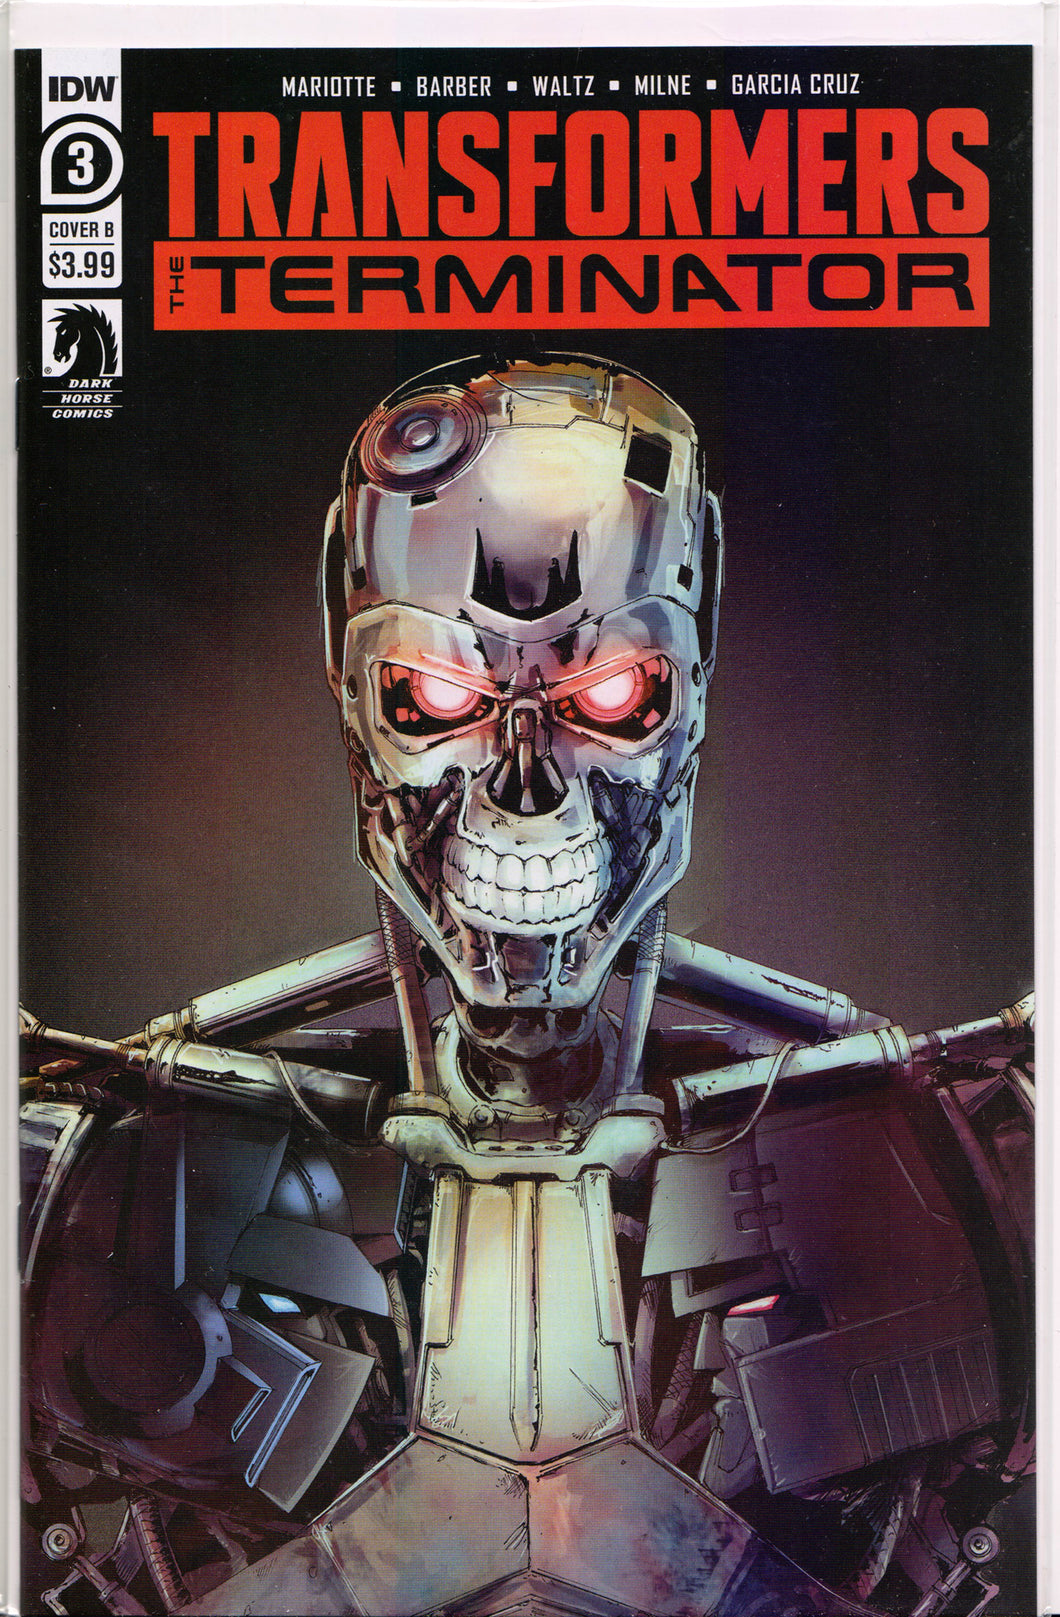 TRANSFORMERS vs. TERMINATOR #3 (COVER B VARIANT) COMIC BOOK ~ IDW